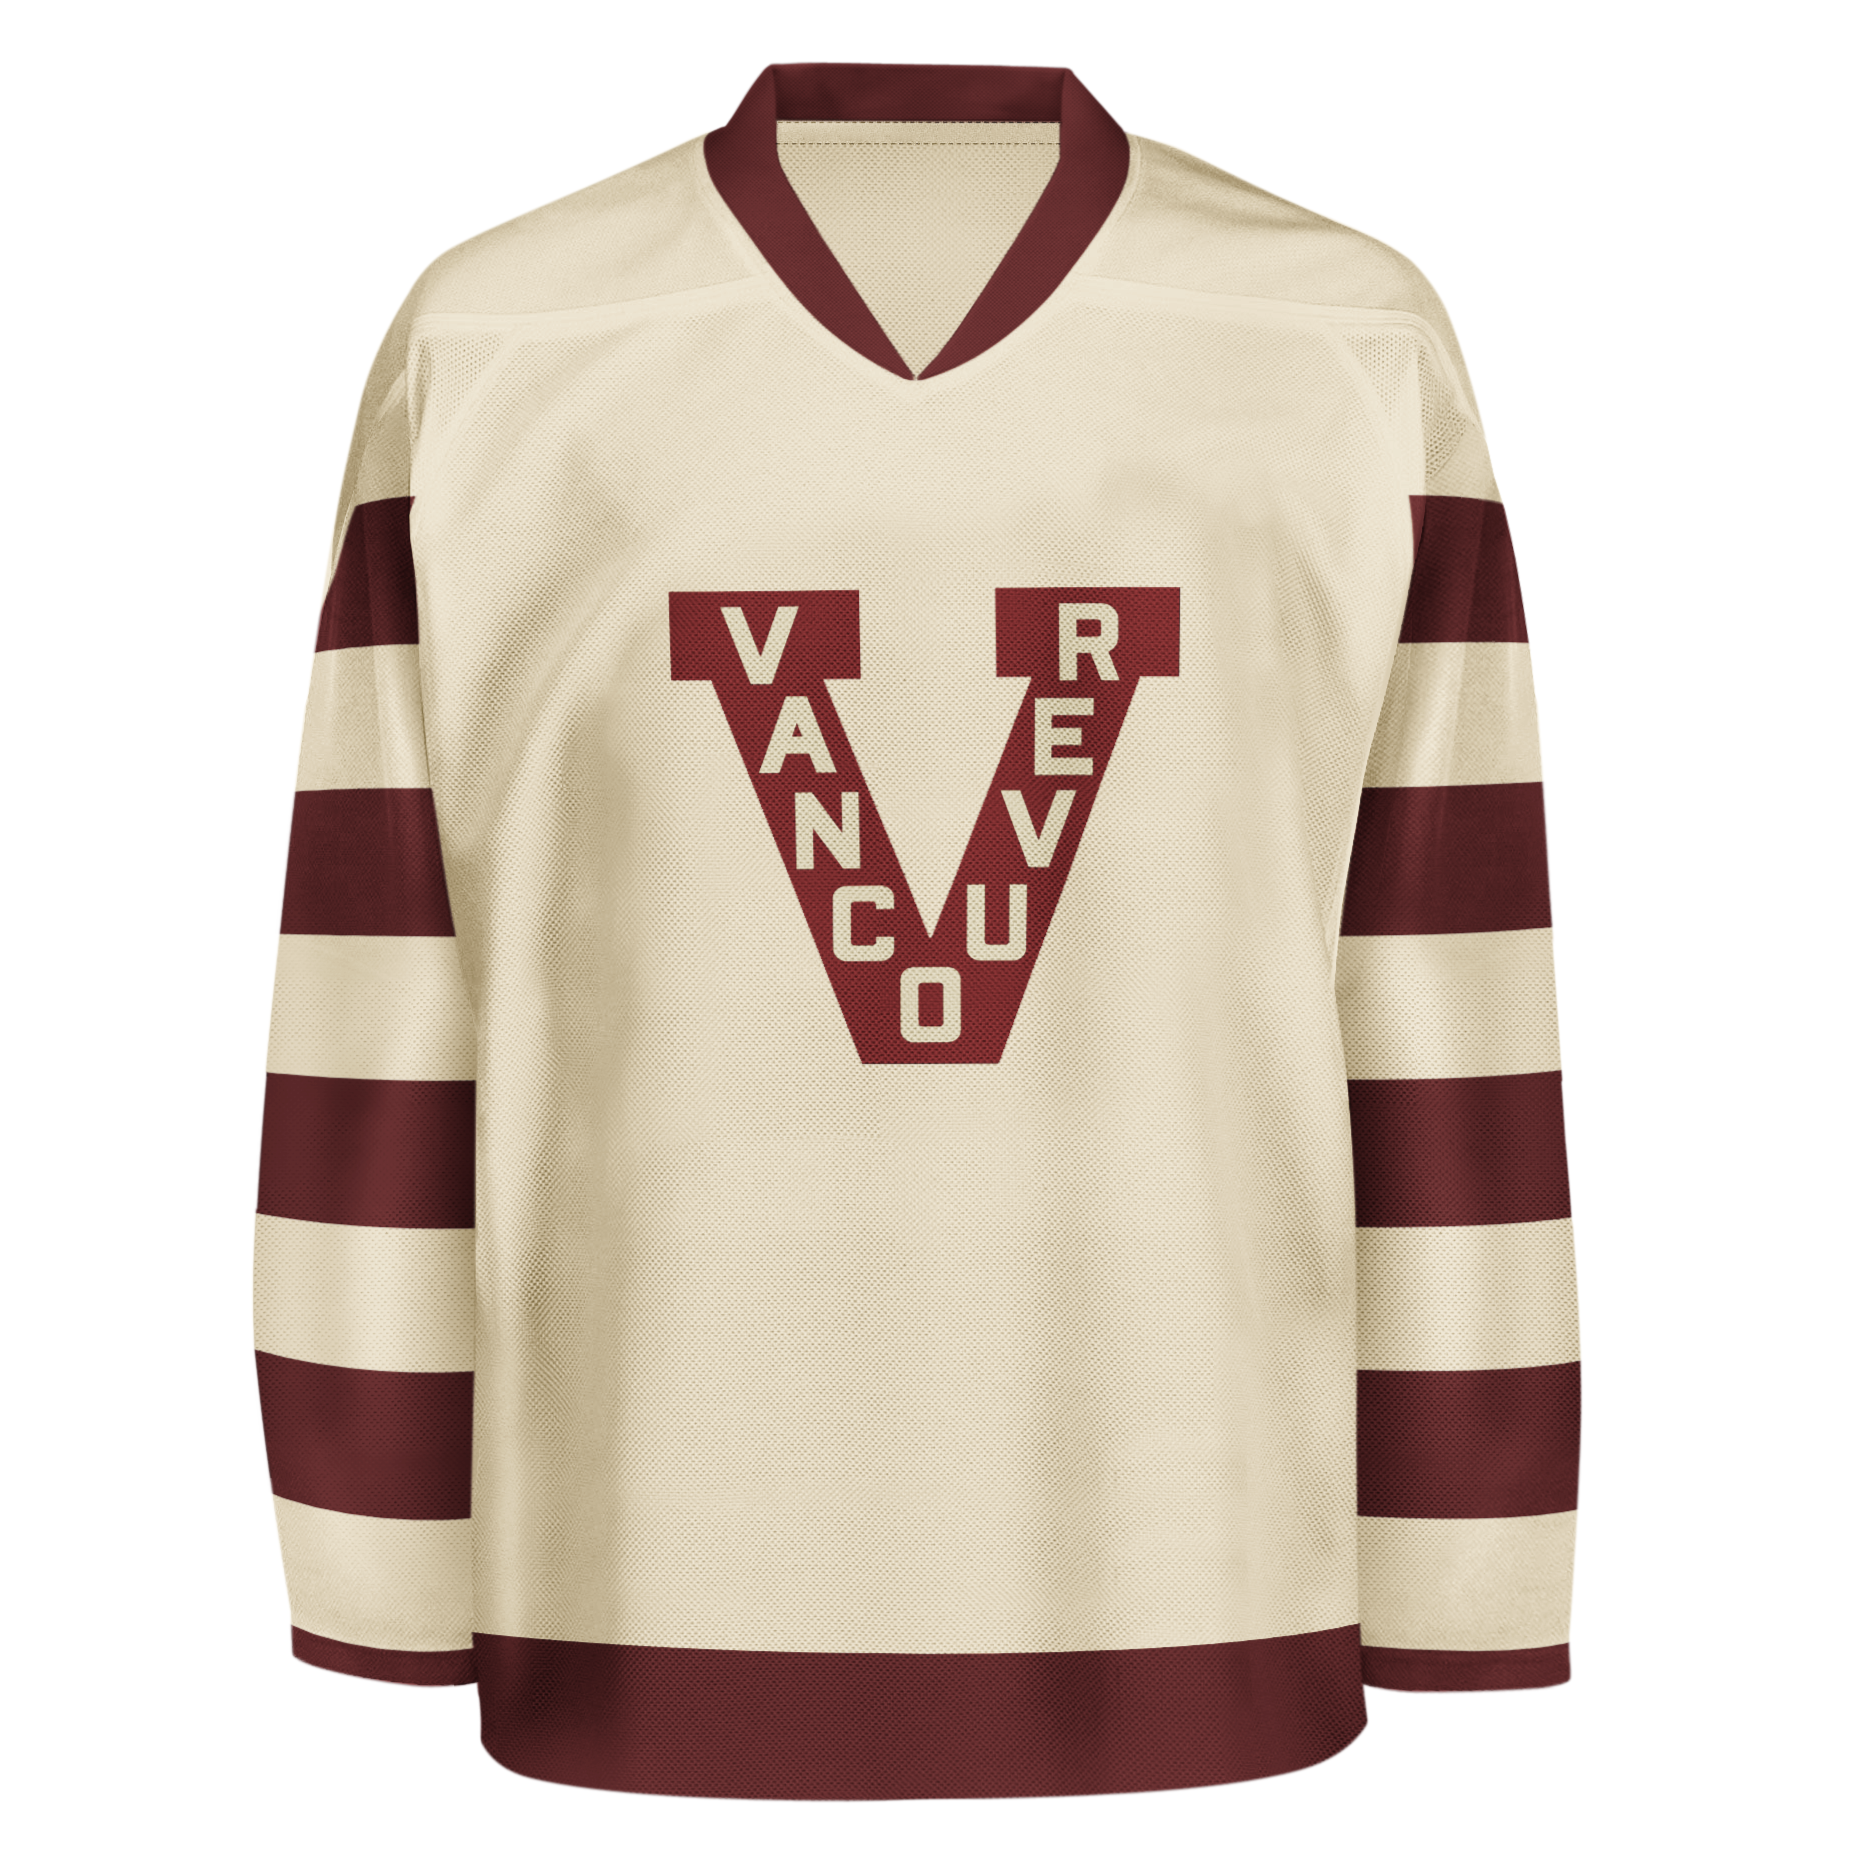 Any Name Number Vancouver Millionaires Retro Custom Hockey Jersey